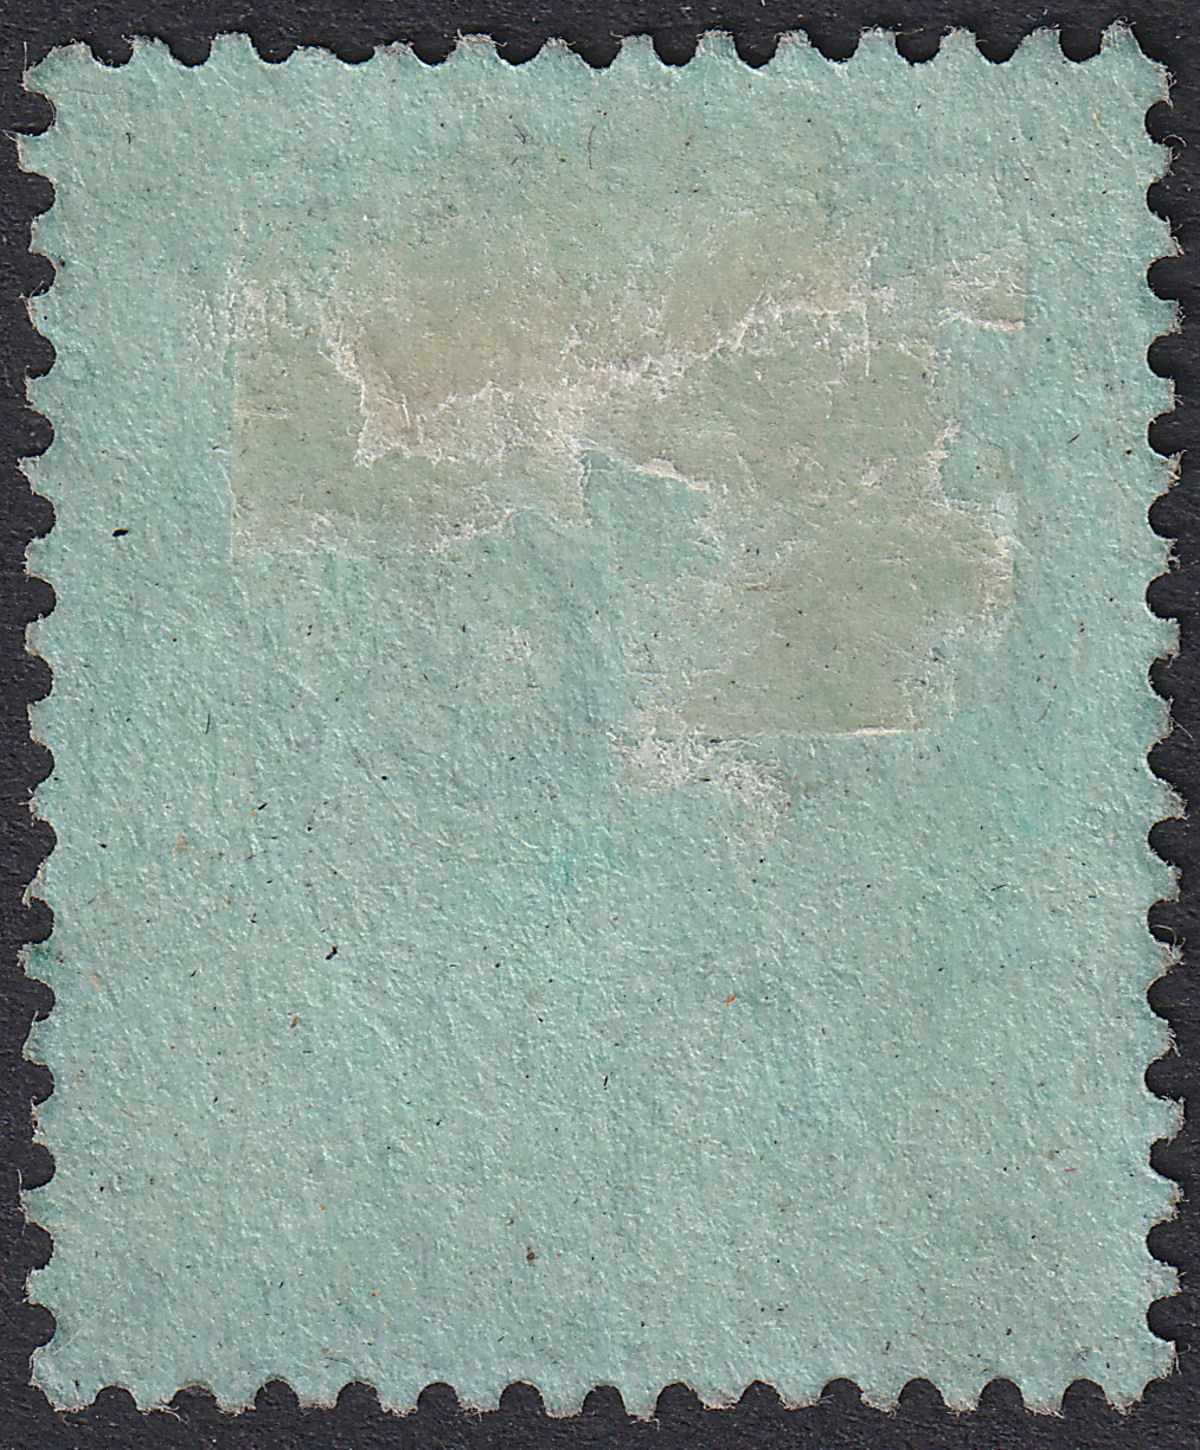 Hong Kong 1907 KEVII 50c Black on Green Used AMOY postmark SG Z92 cat £80